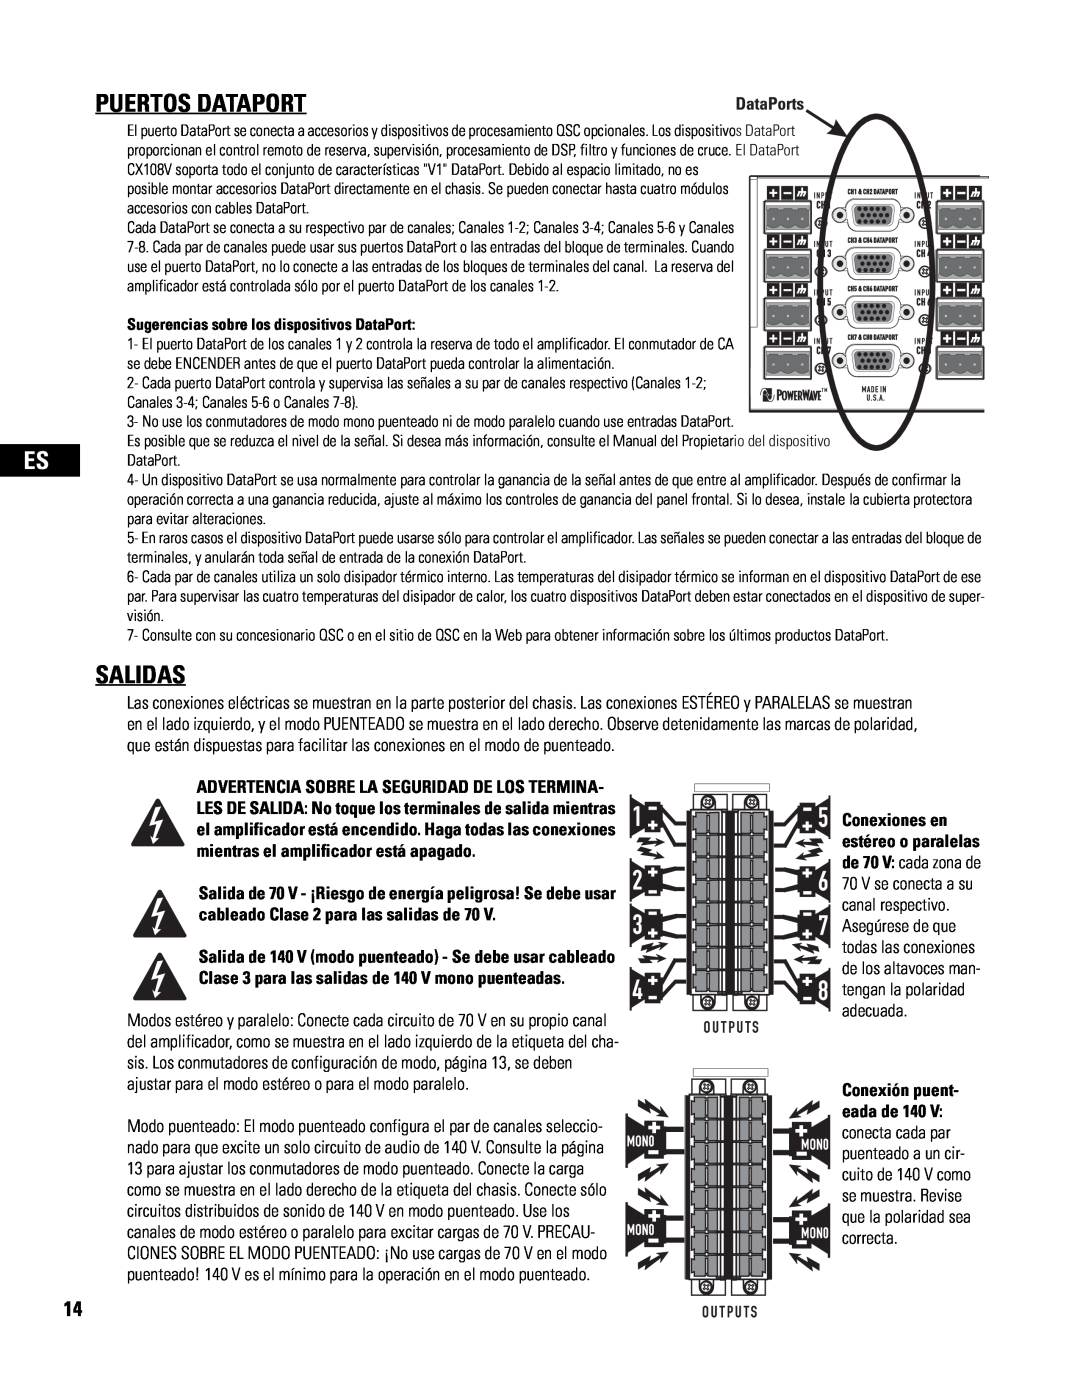 QSC Audio CX108V user manual Puertos Dataport, Salidas 